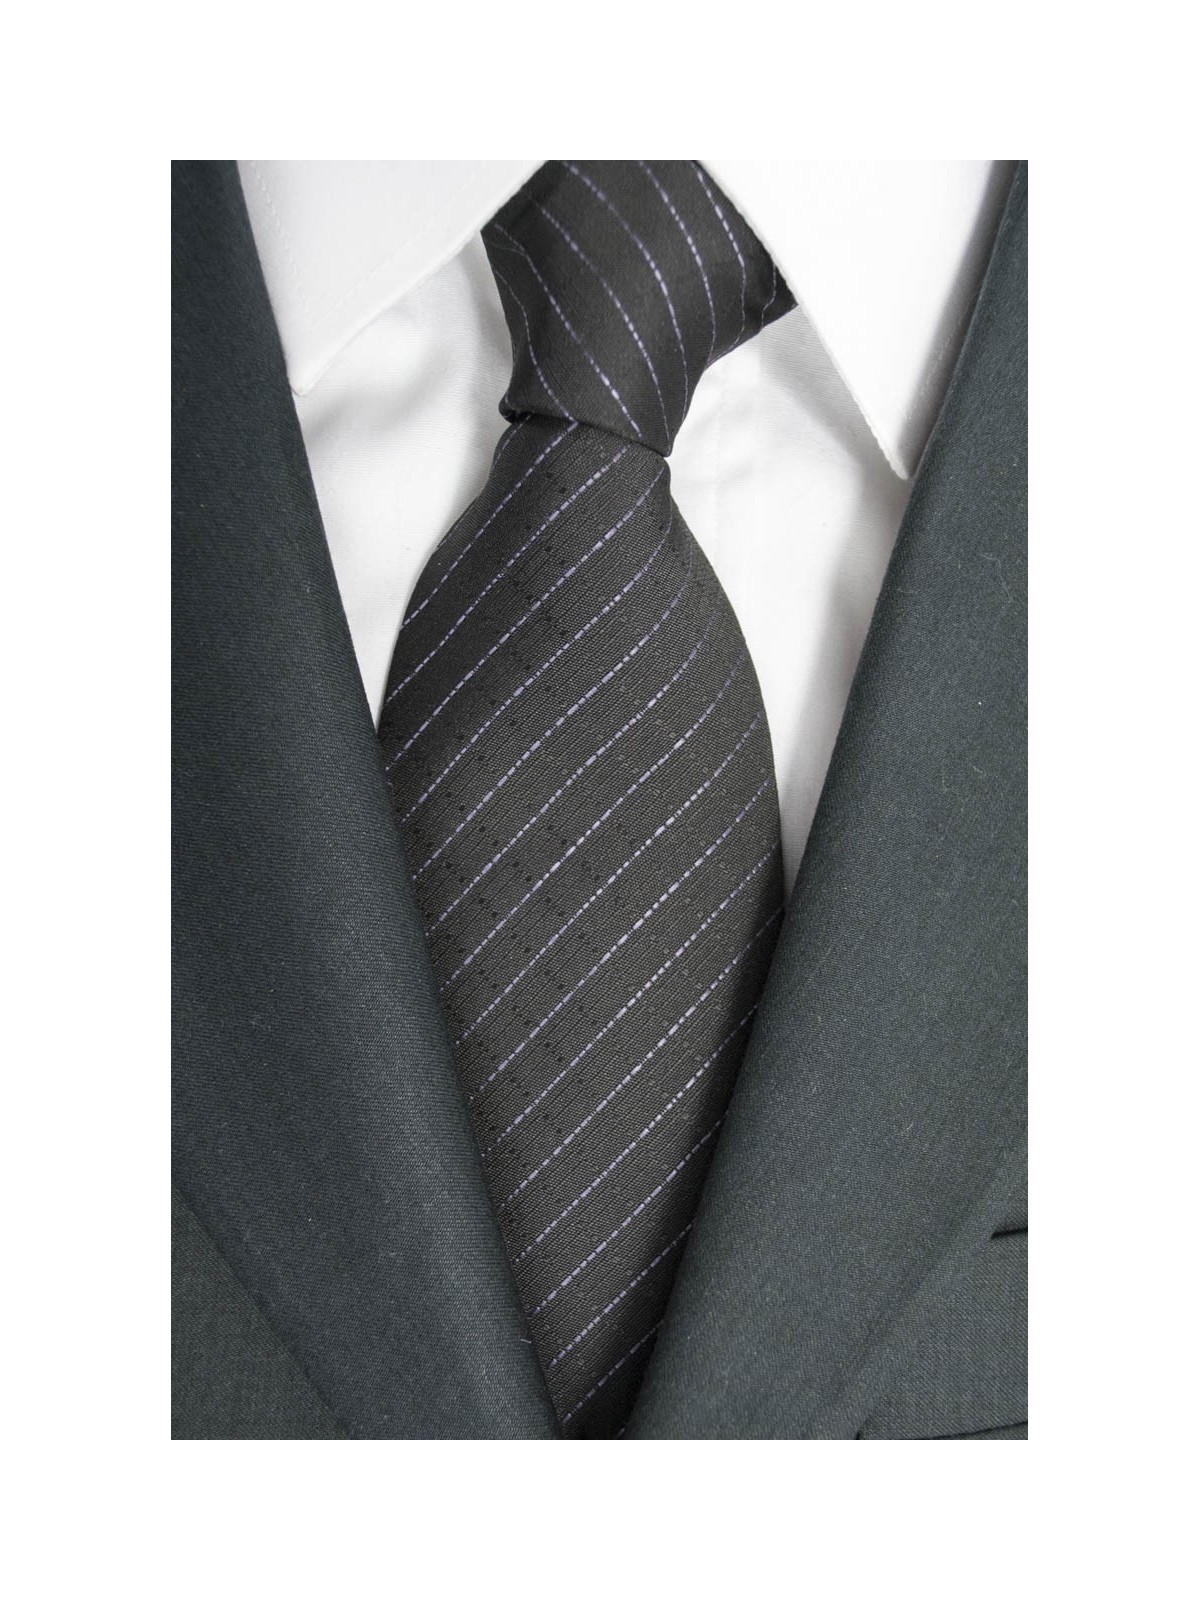 Krawatte Breit Grau Regimental Rosa - 100% Reine Seide - Made in Italy